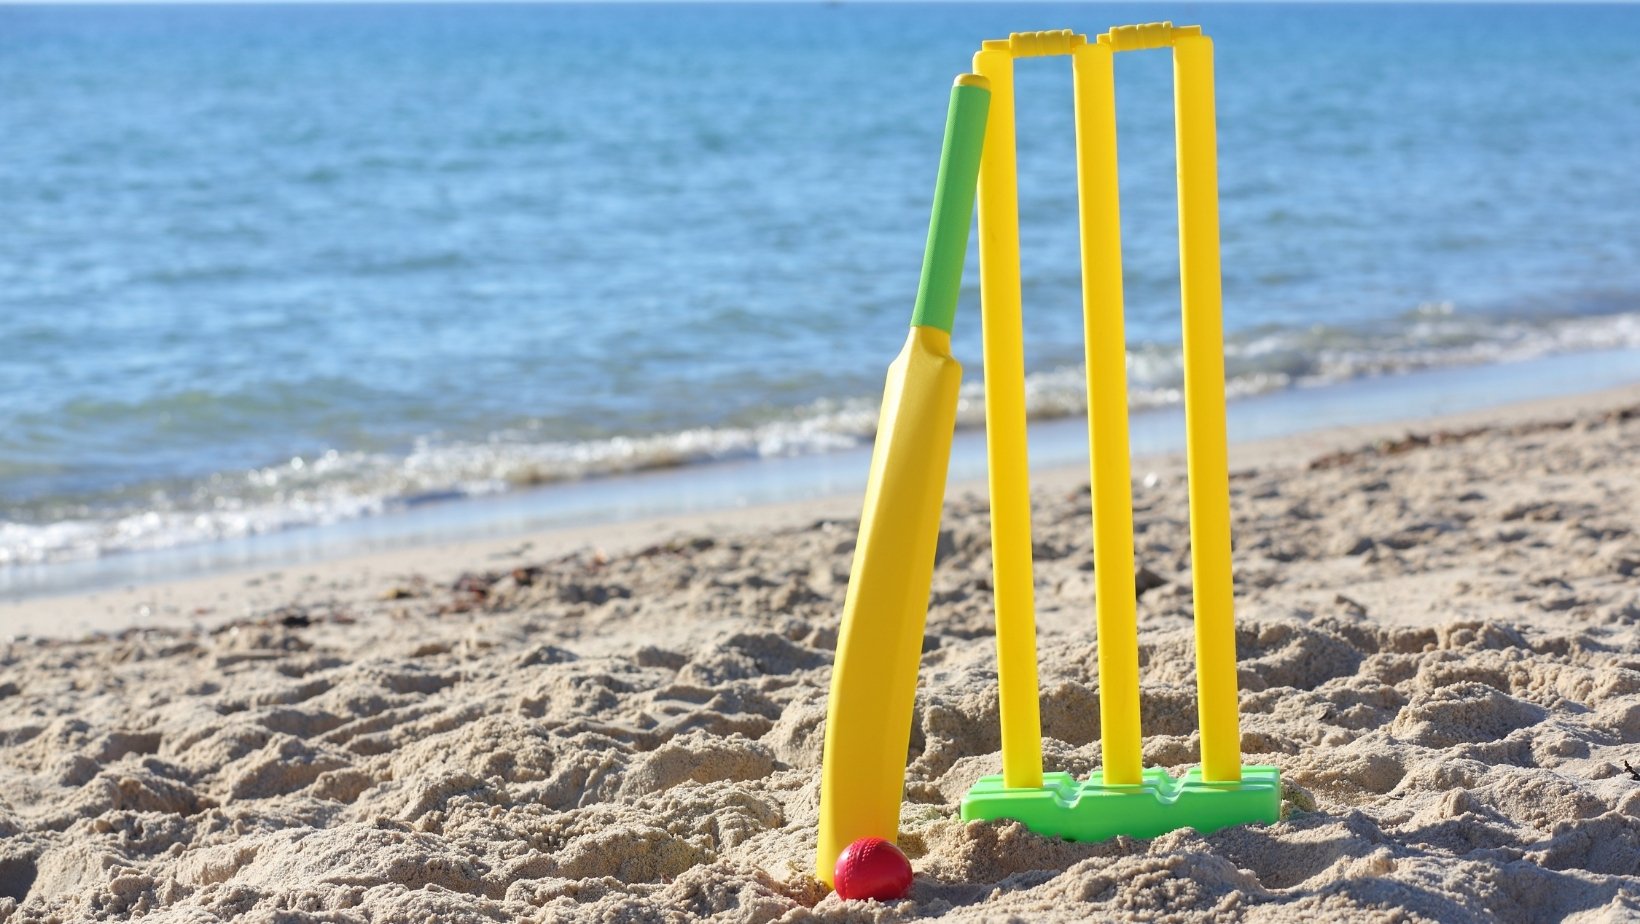 Backyard cricket on the beach, New South Wales, Australia